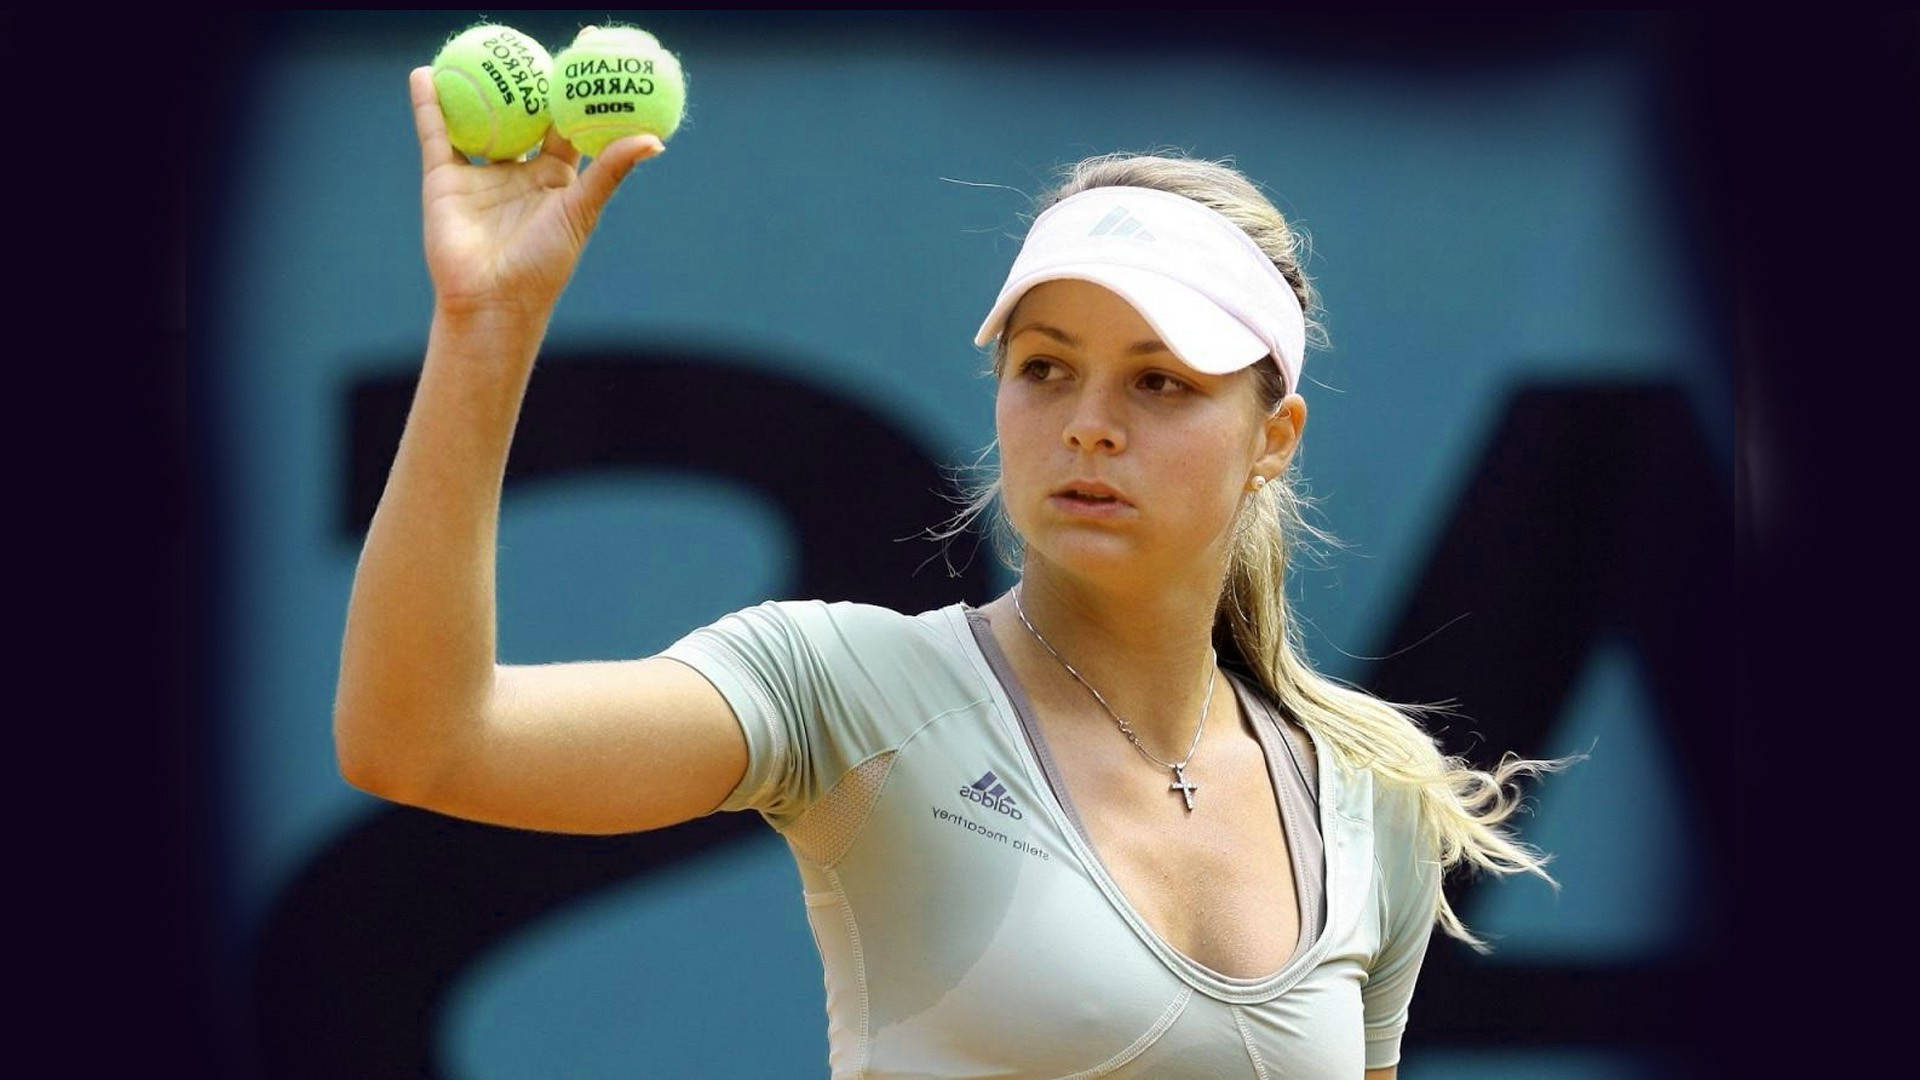 Maria Kirilenko skillfully holding two tennis balls Wallpaper